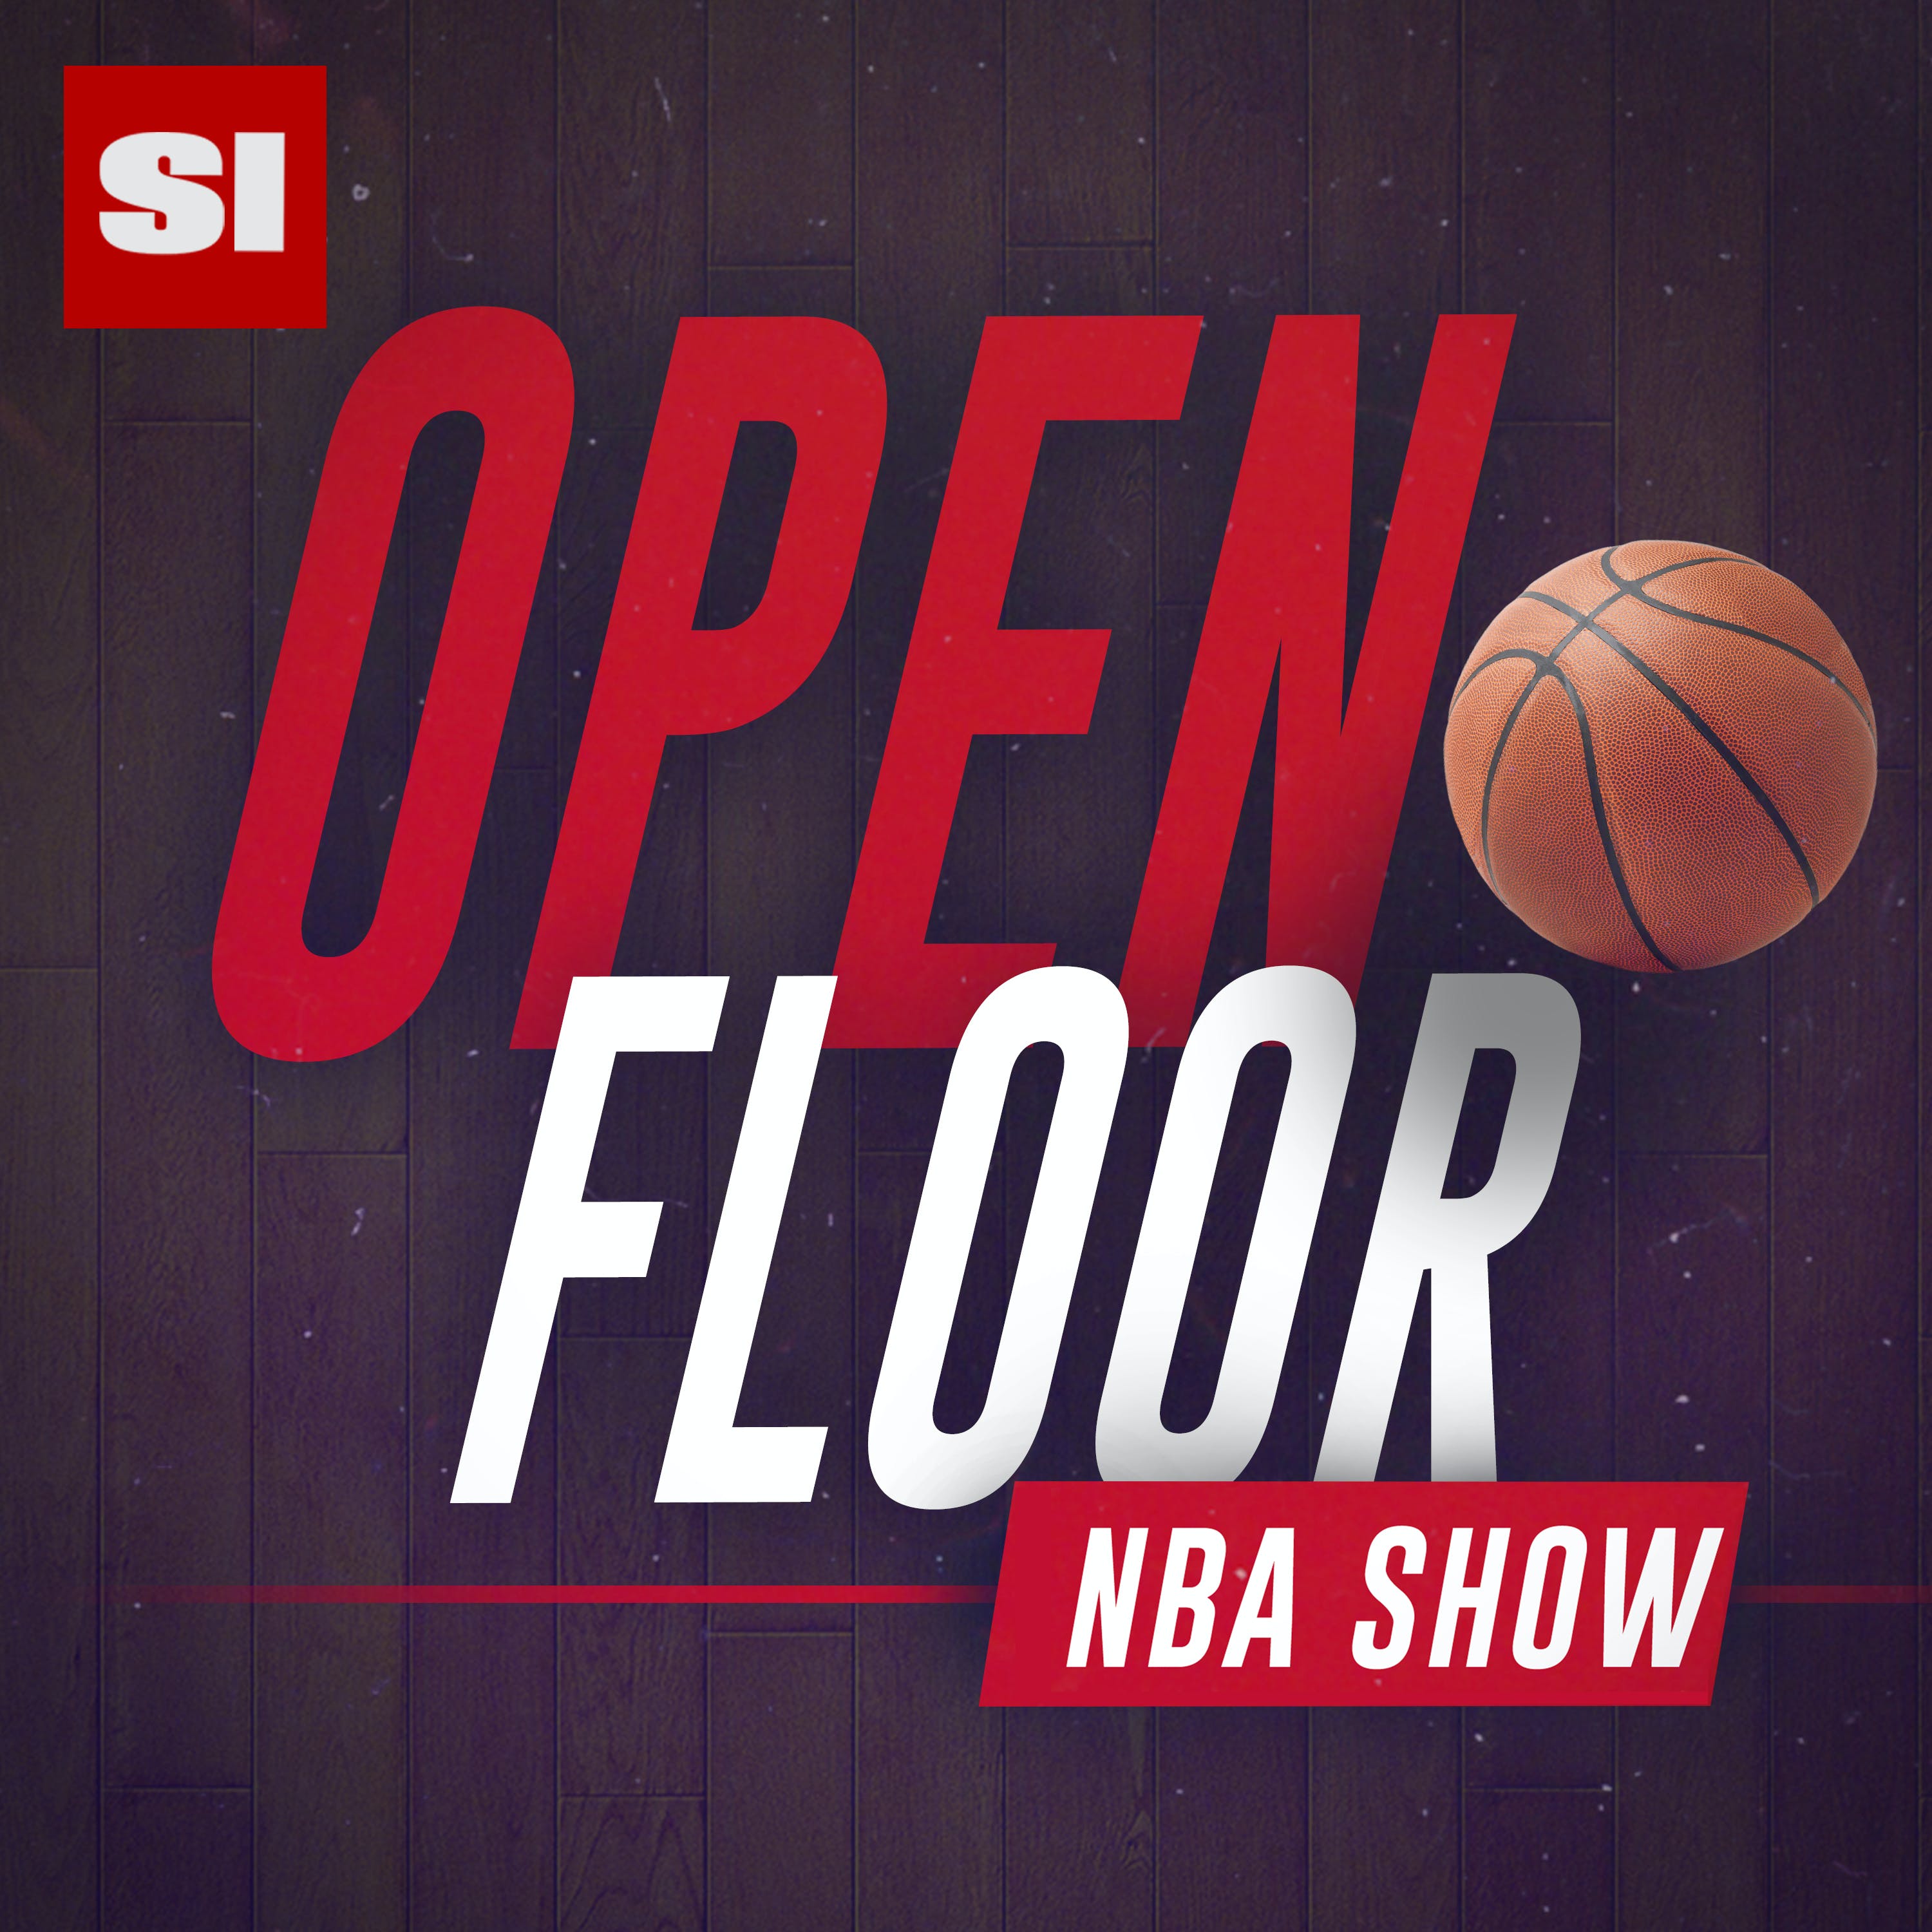 NBA trade deadline preview, Kobe Bryant's tribute, All-Star angst